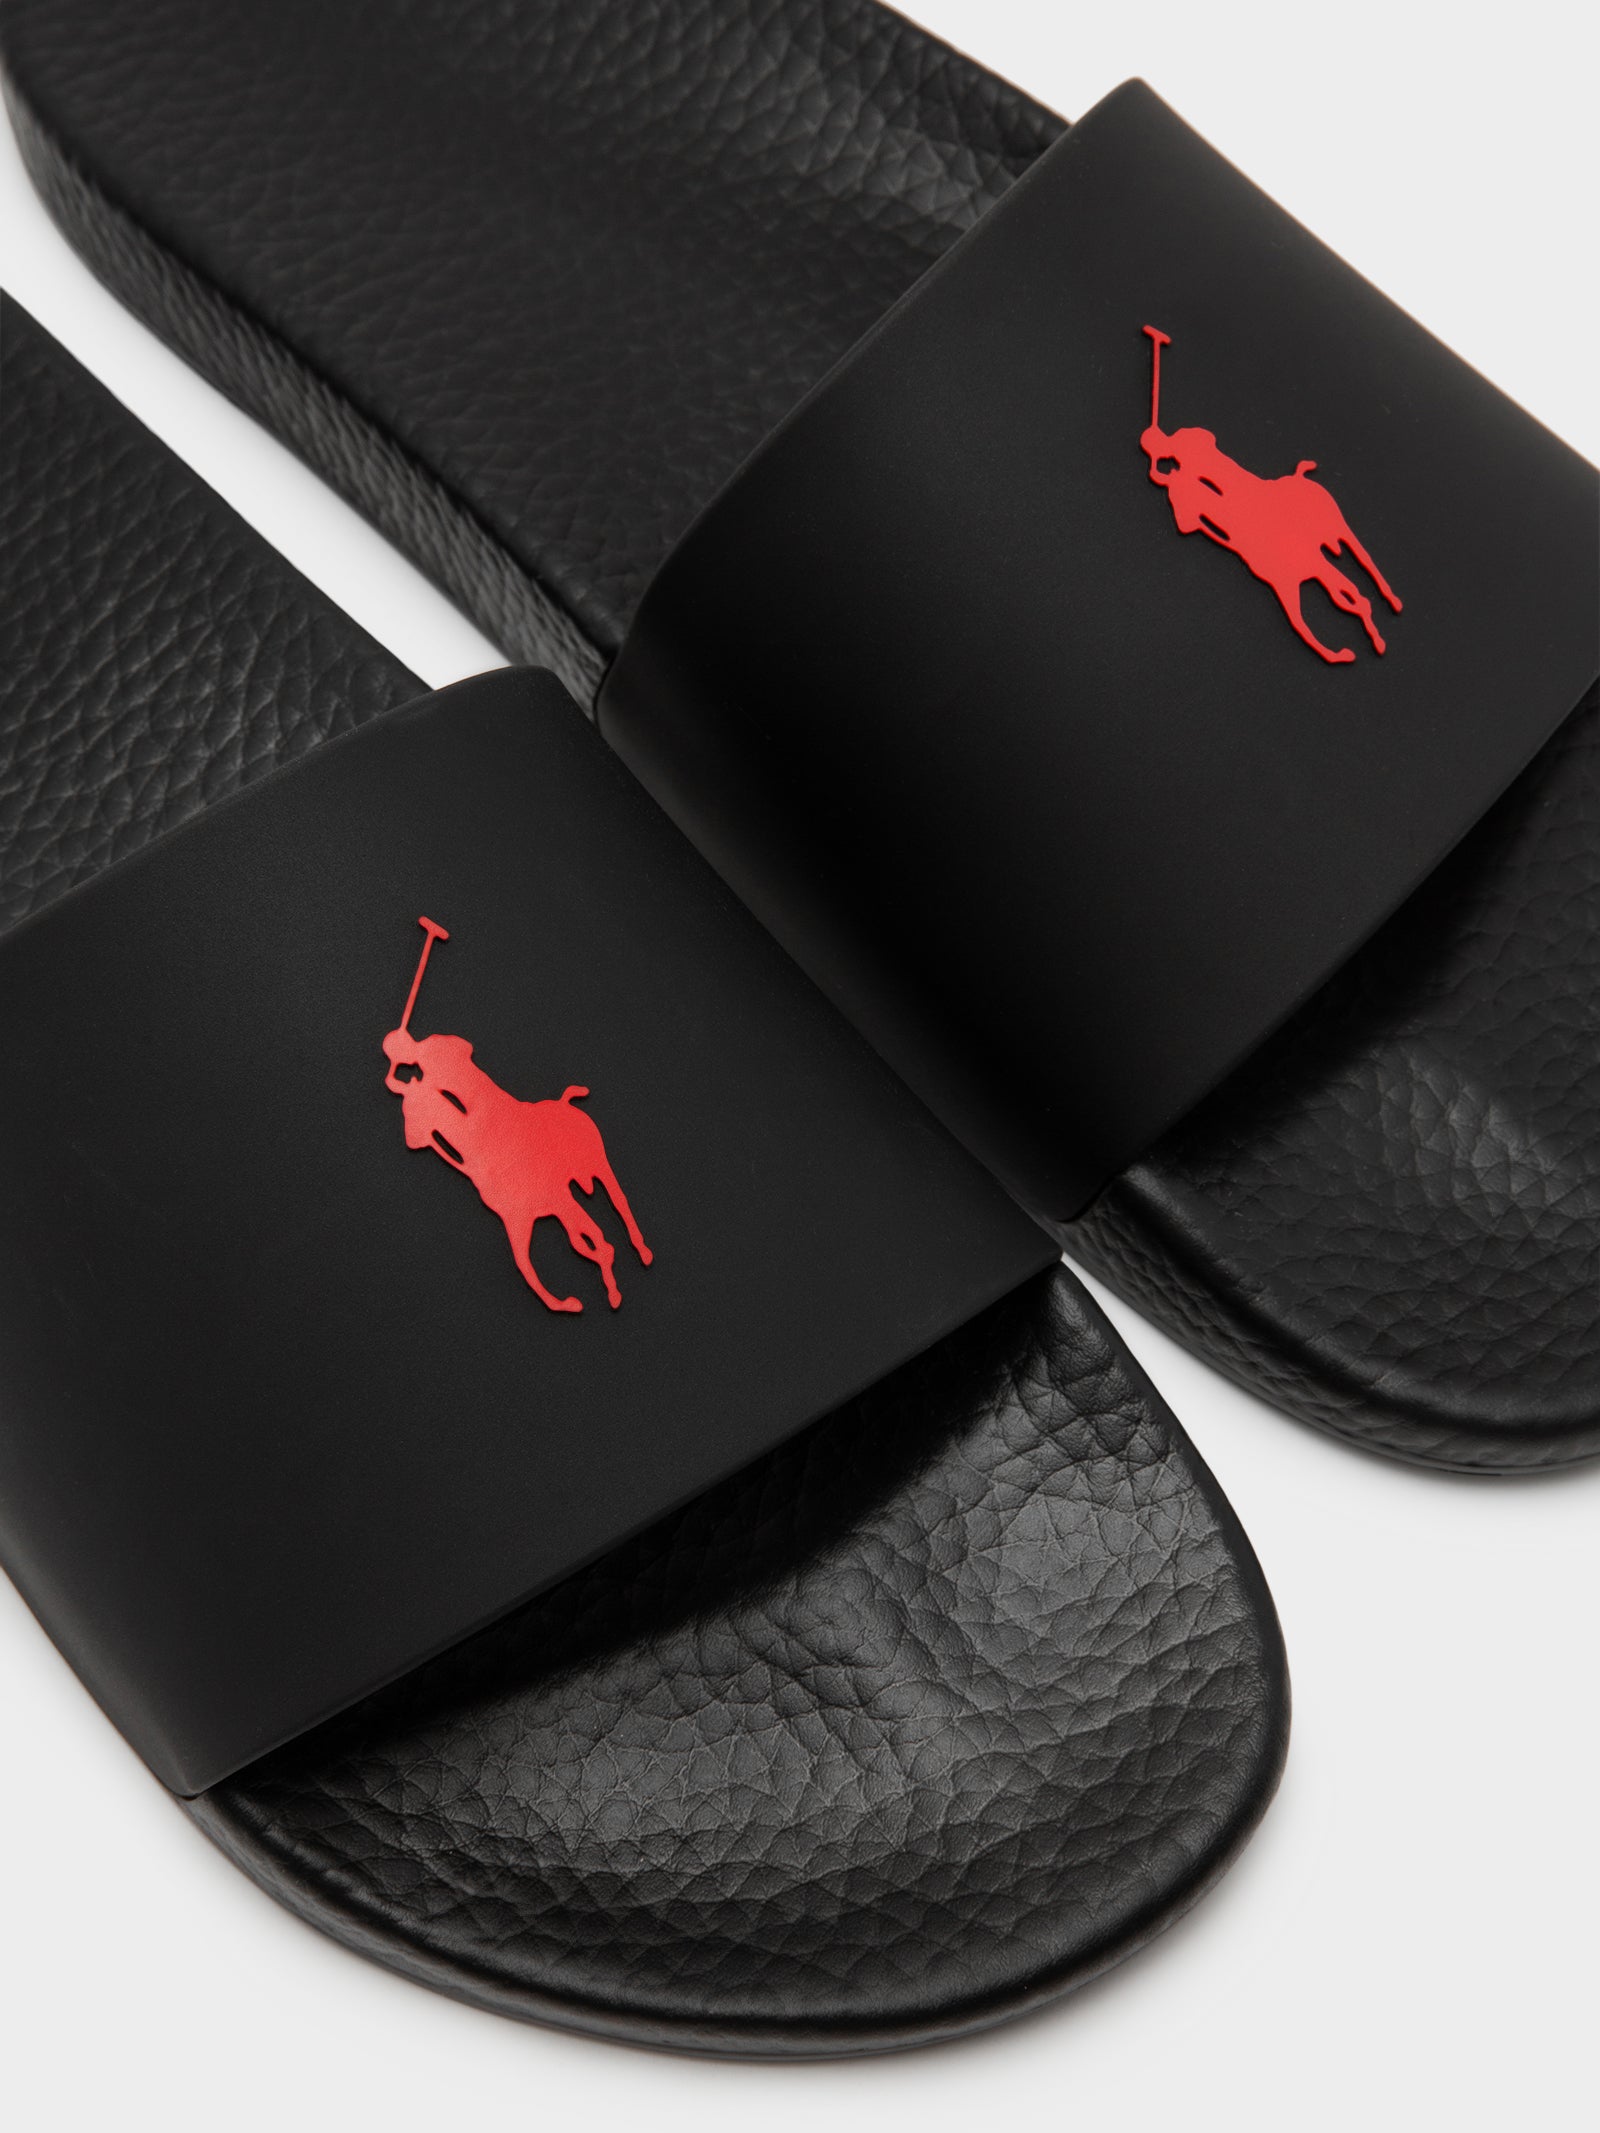 Unisex Polo Sport Slides in Red & Black